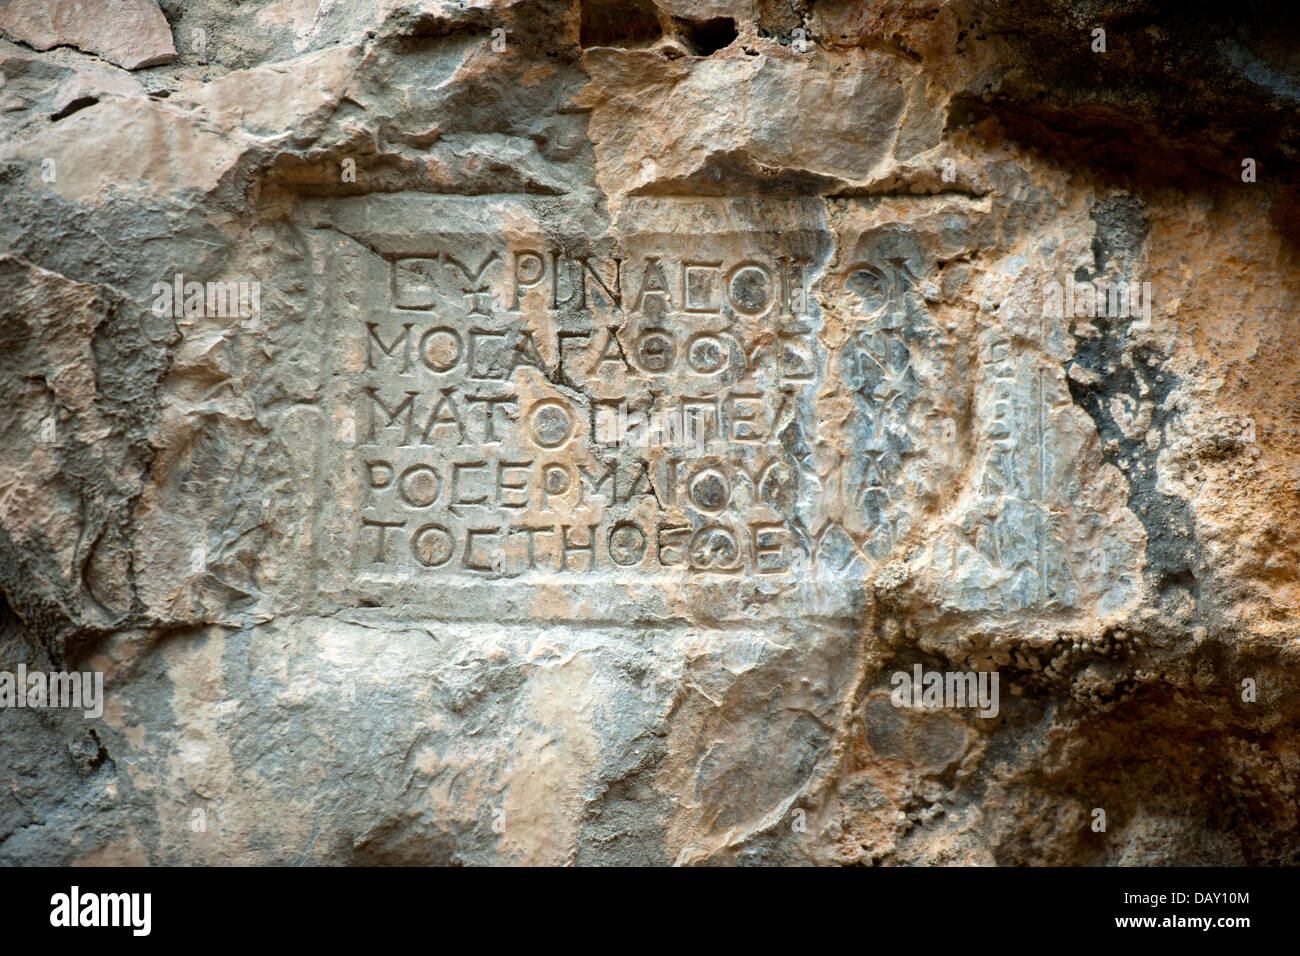 Türkei, Provinz Antalya, Dösemealti, Dorf Yagca, griechische Inschrift am Felsen vor der Karain Höhle Stock Photo